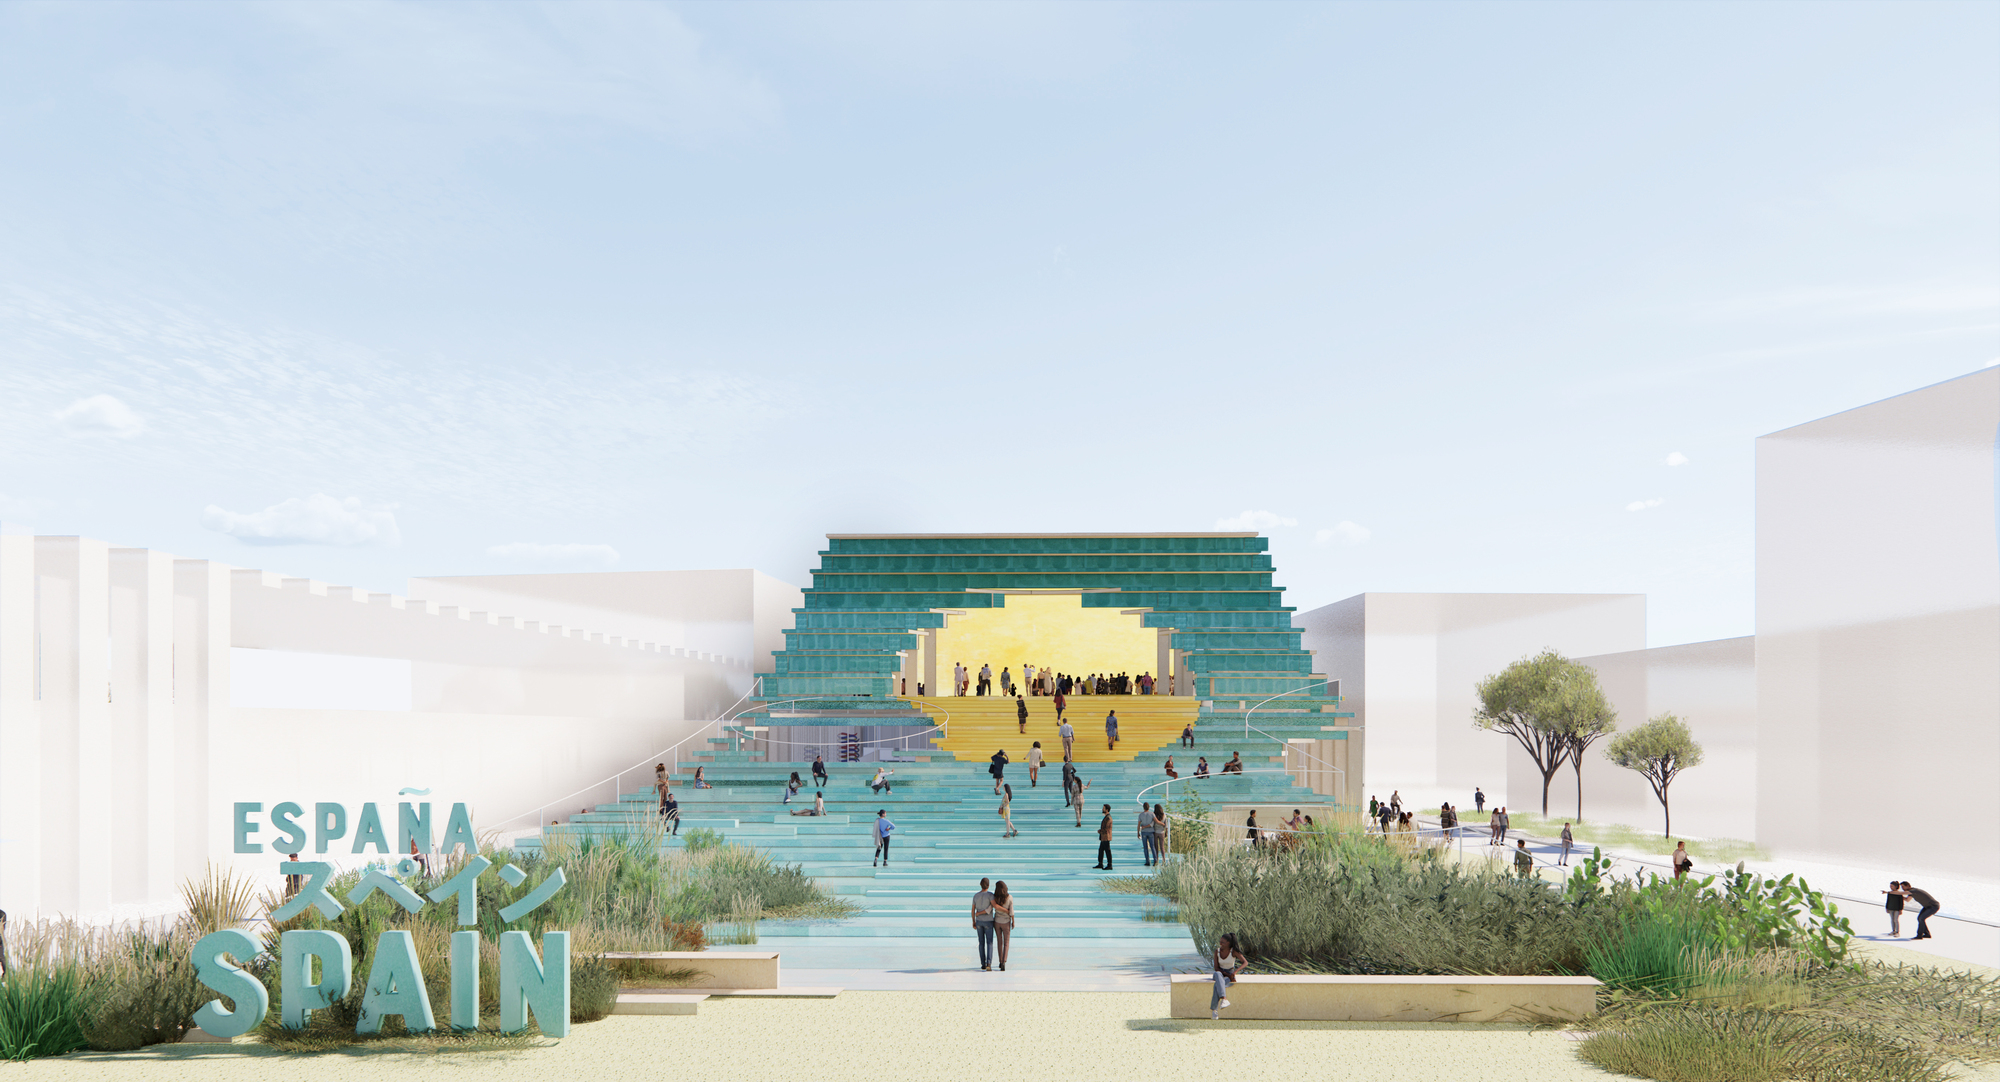 Испанский павильон на выставке Expo Osaka 2025 будет спроектирован Enorme Studio, Néstor Montenegro и Smart and Green Design.